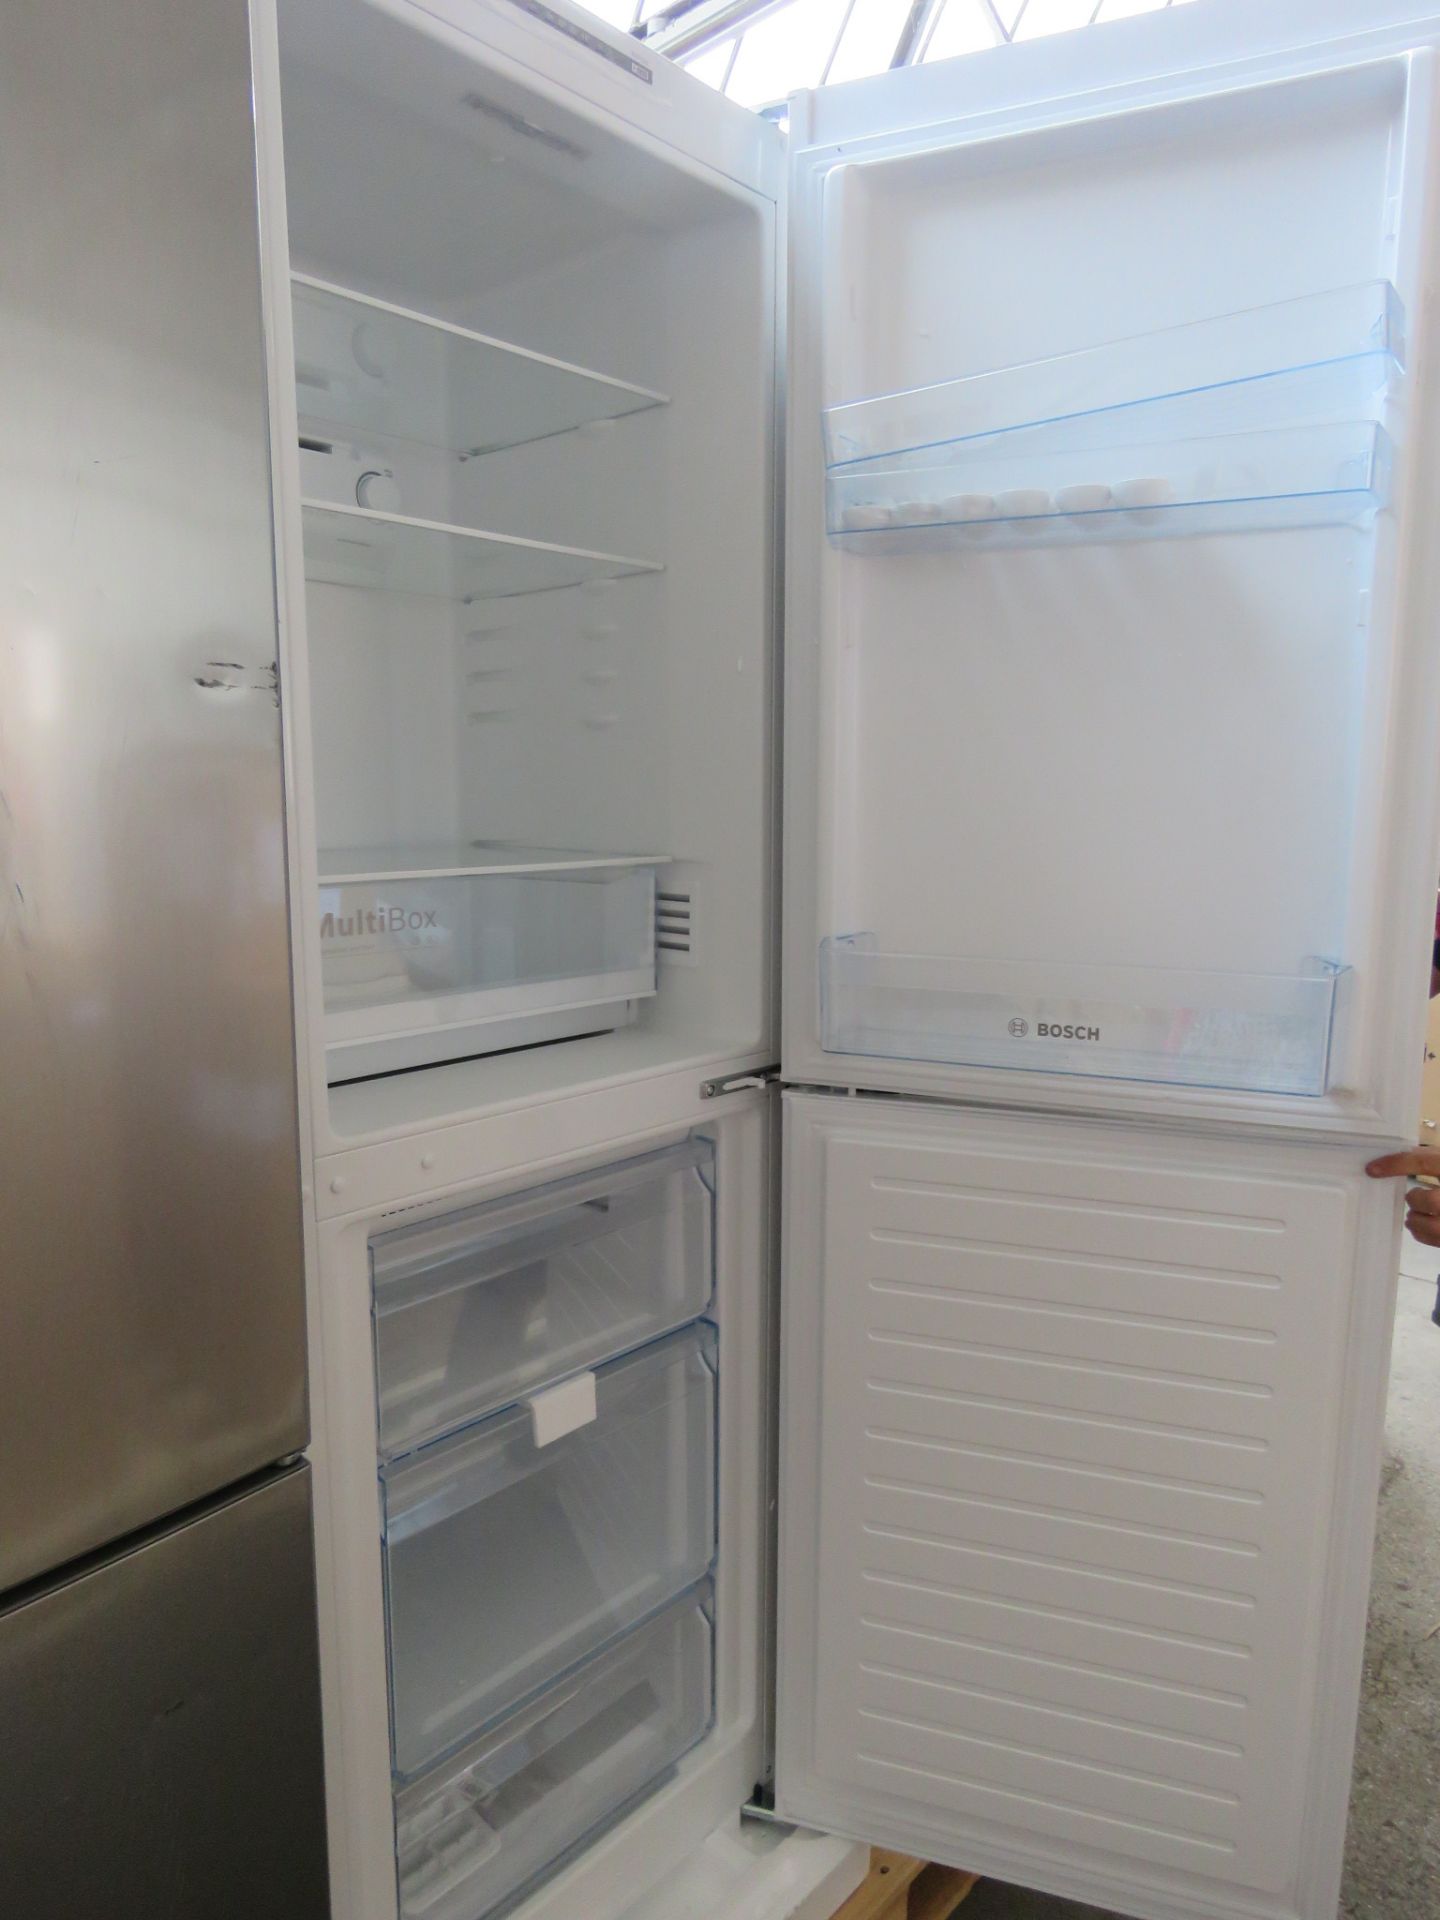 KGN34NWEAGB Bosch Free-standing fridge-freezer - Image 3 of 3